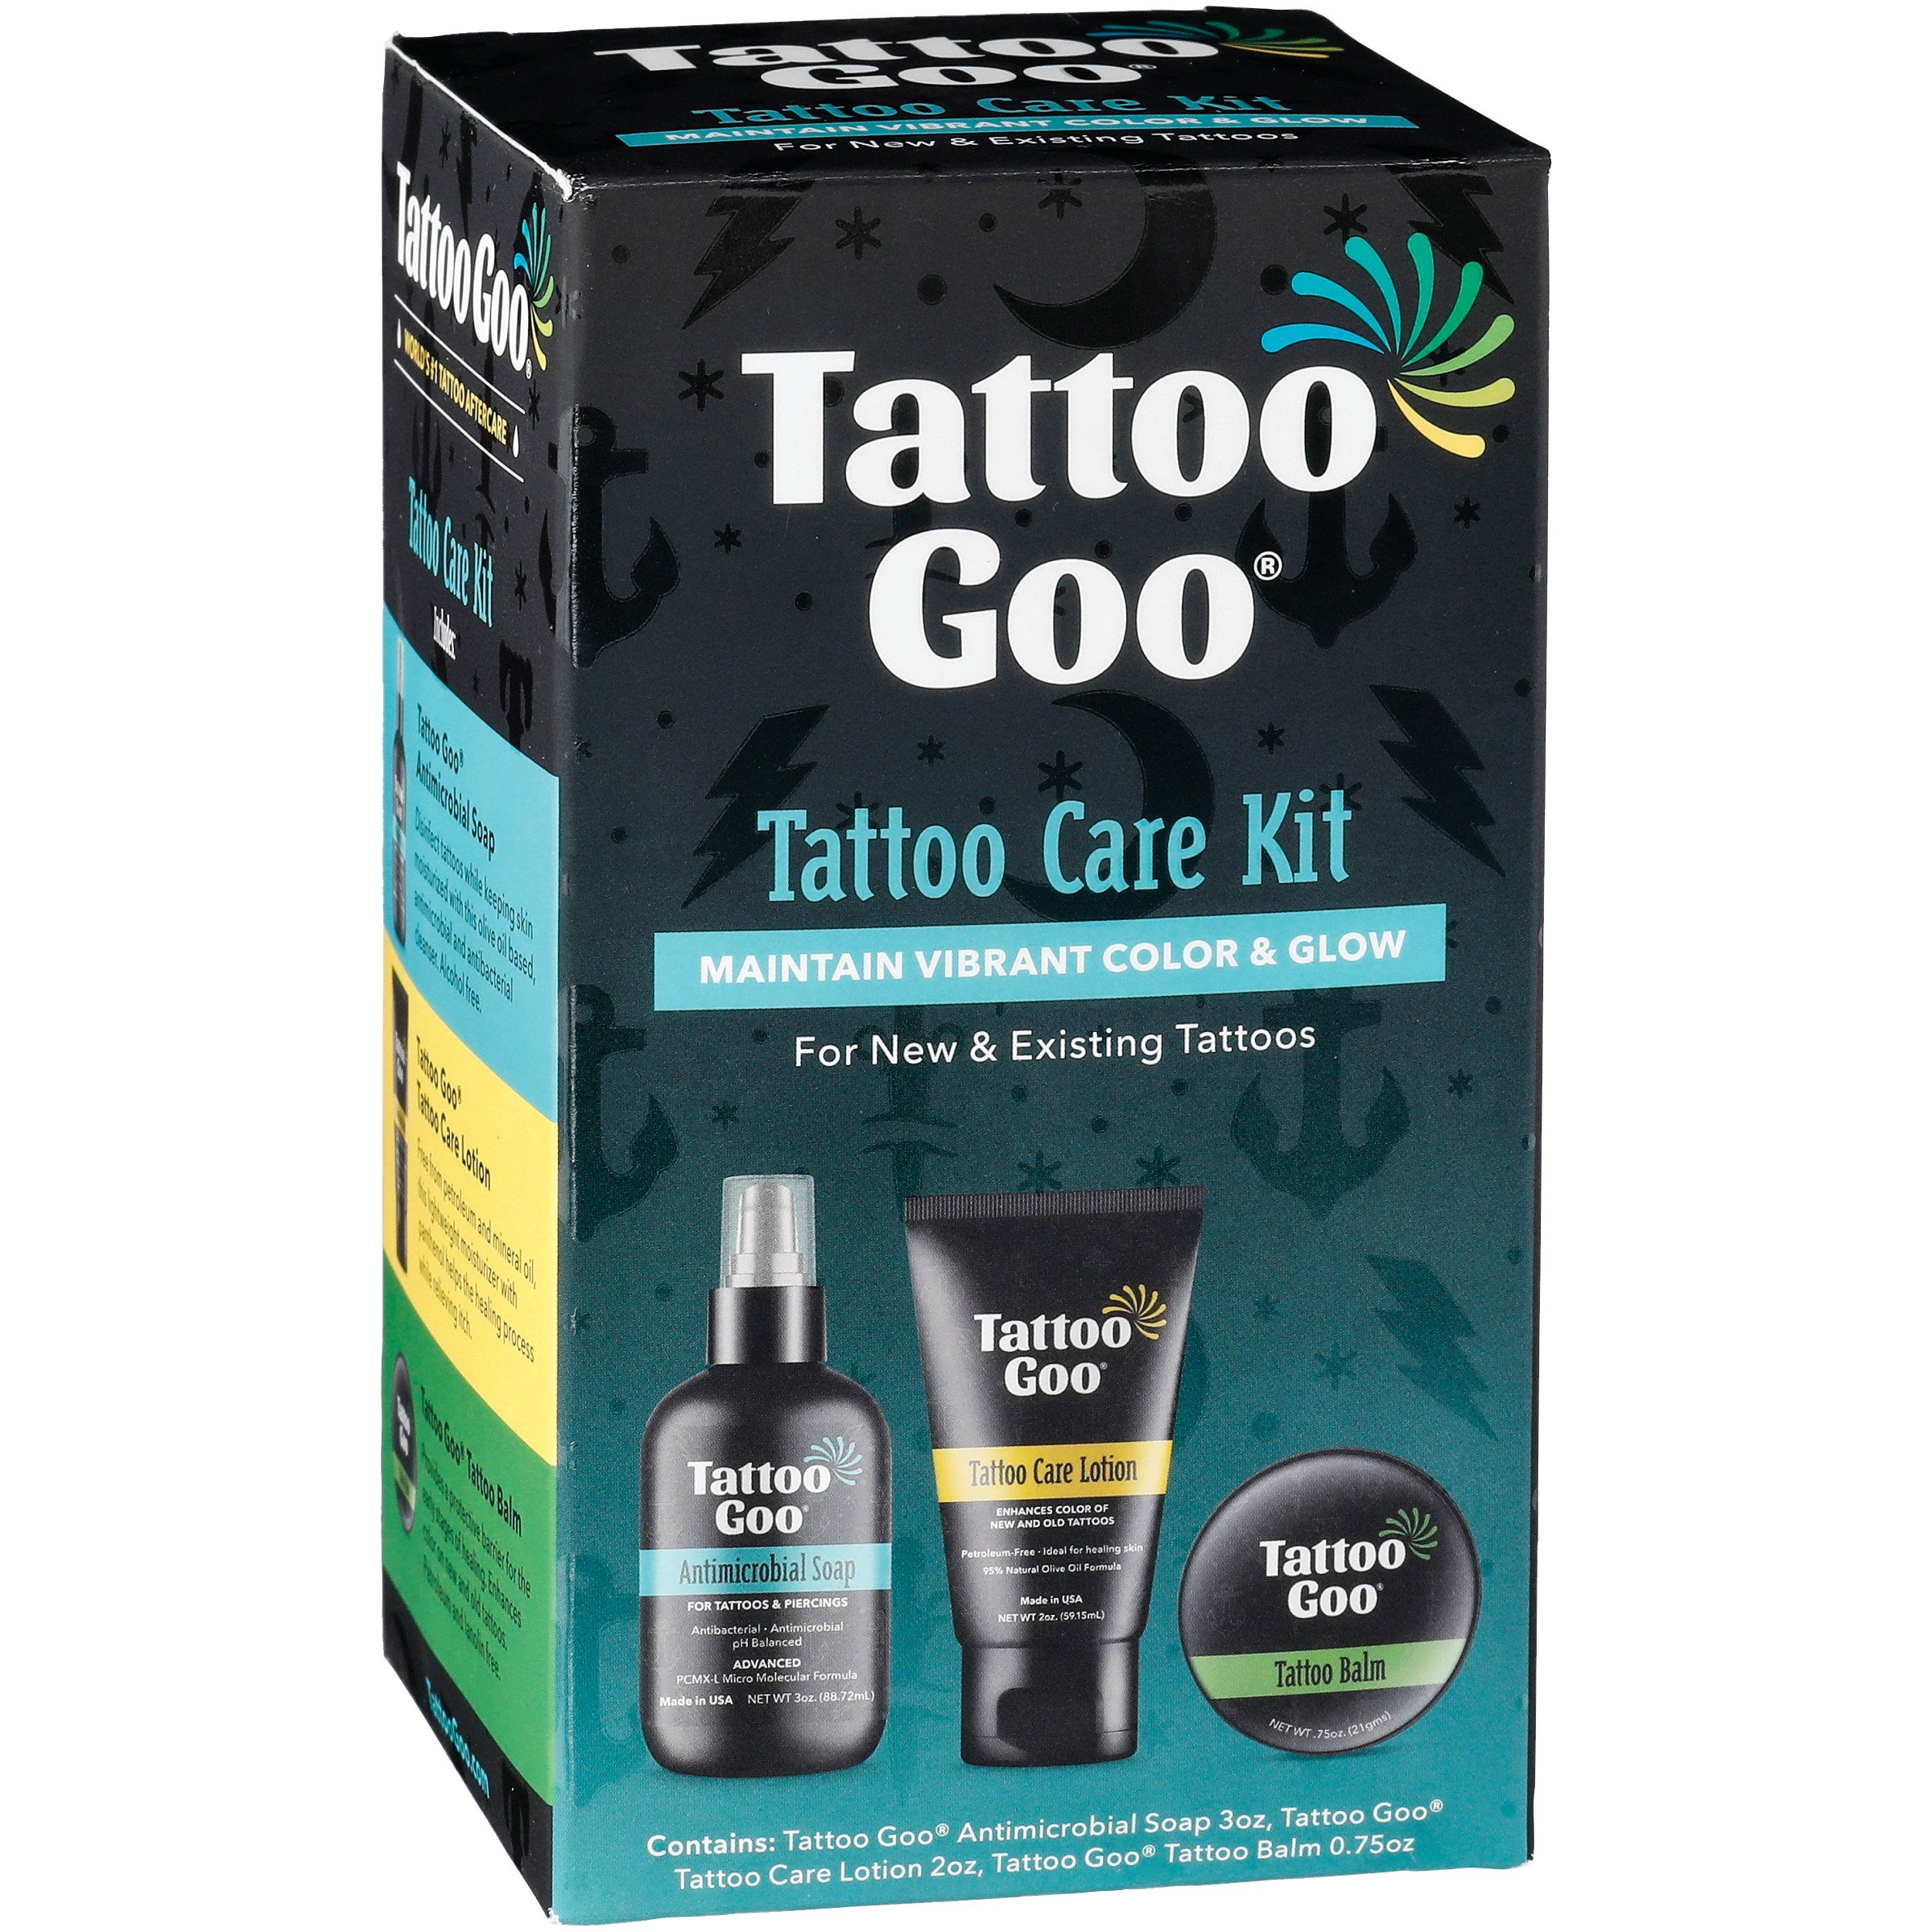 Tattoo Goo Aftercare Kit - Shop Medicines & Treatments at H-E-B